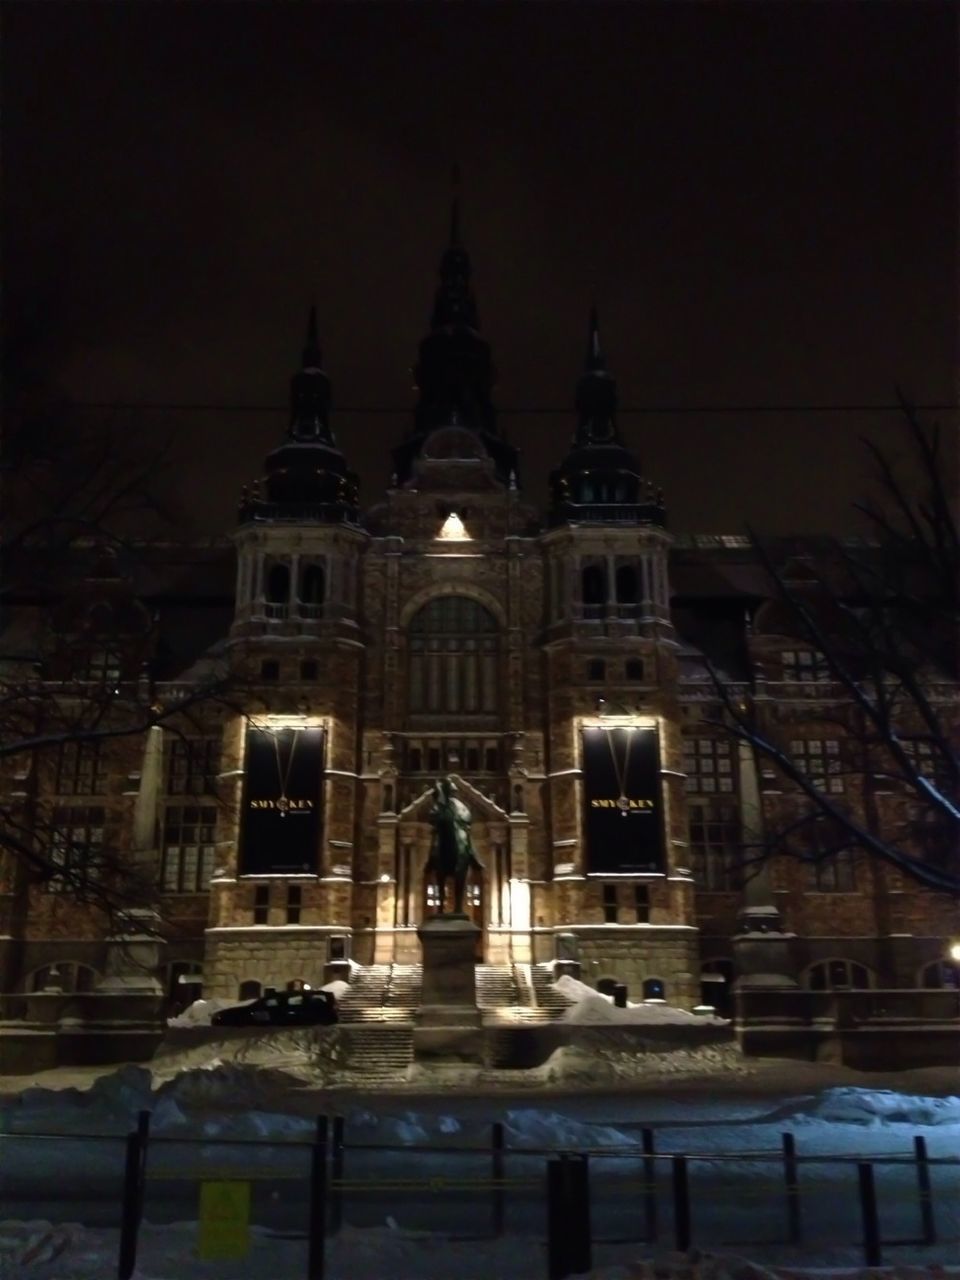 VIEW OF CHURCH AT NIGHT